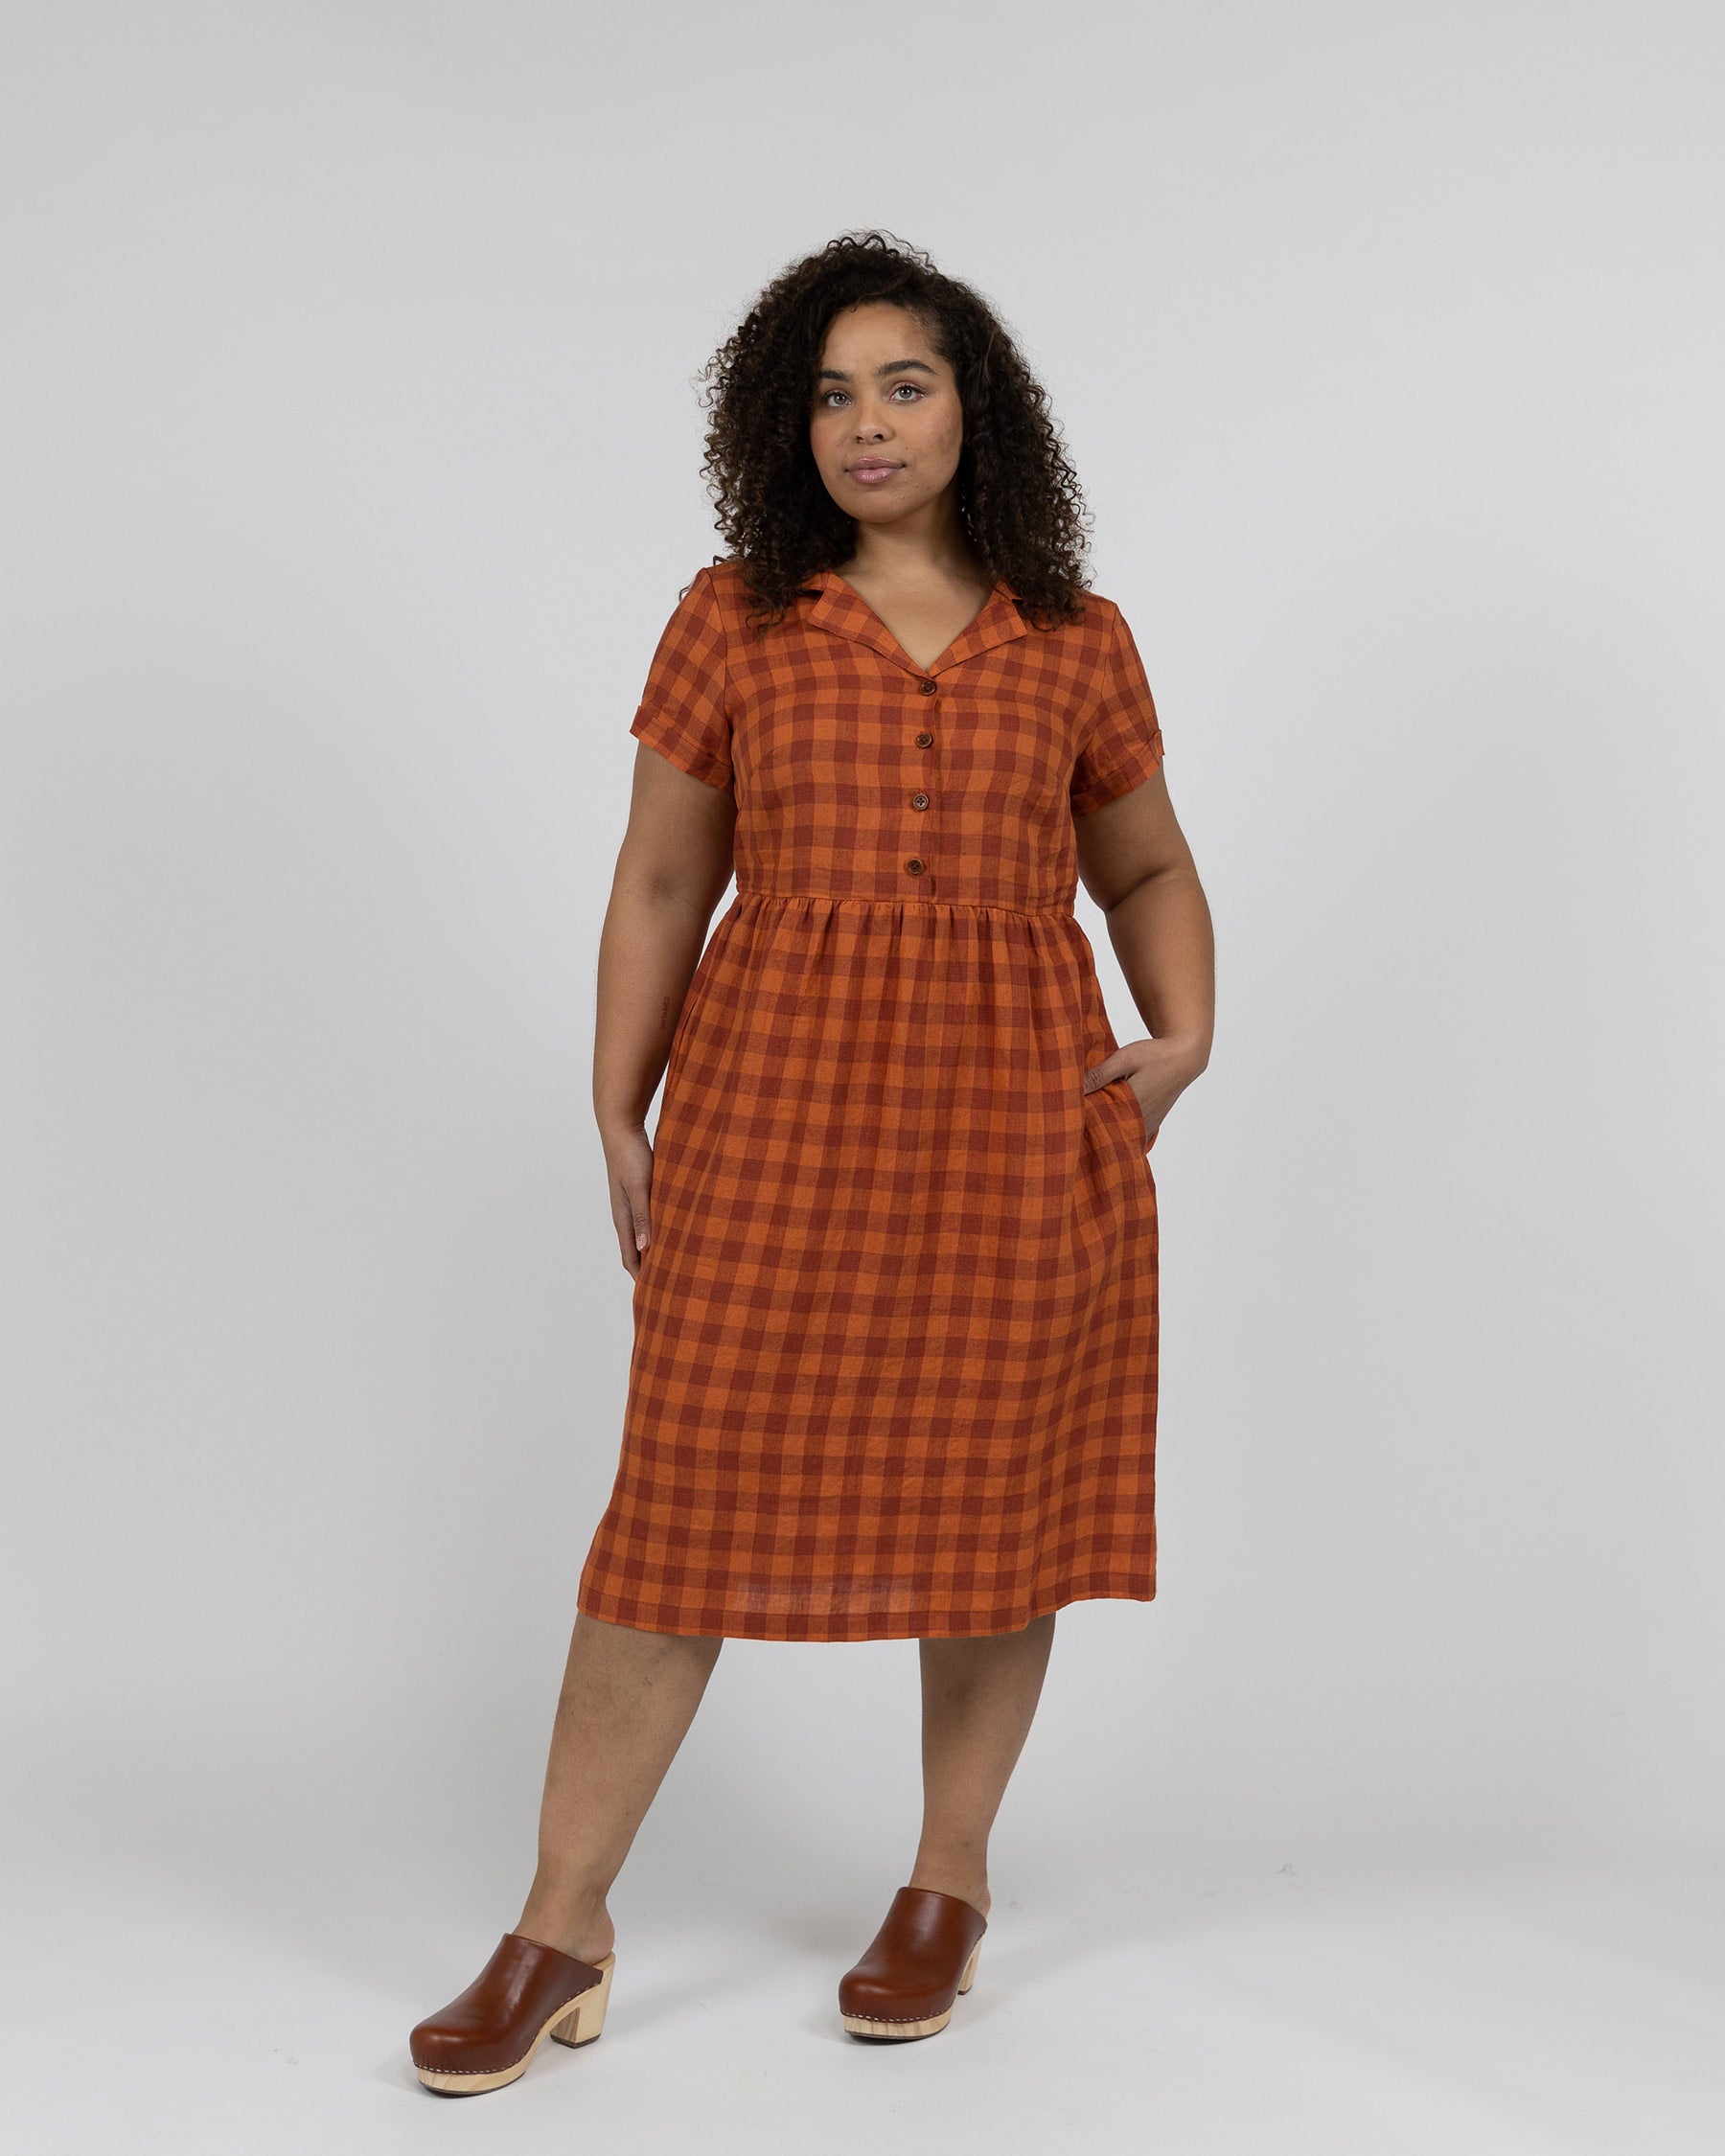 Model No.30 Collared Linen Dress in Marmalade Check